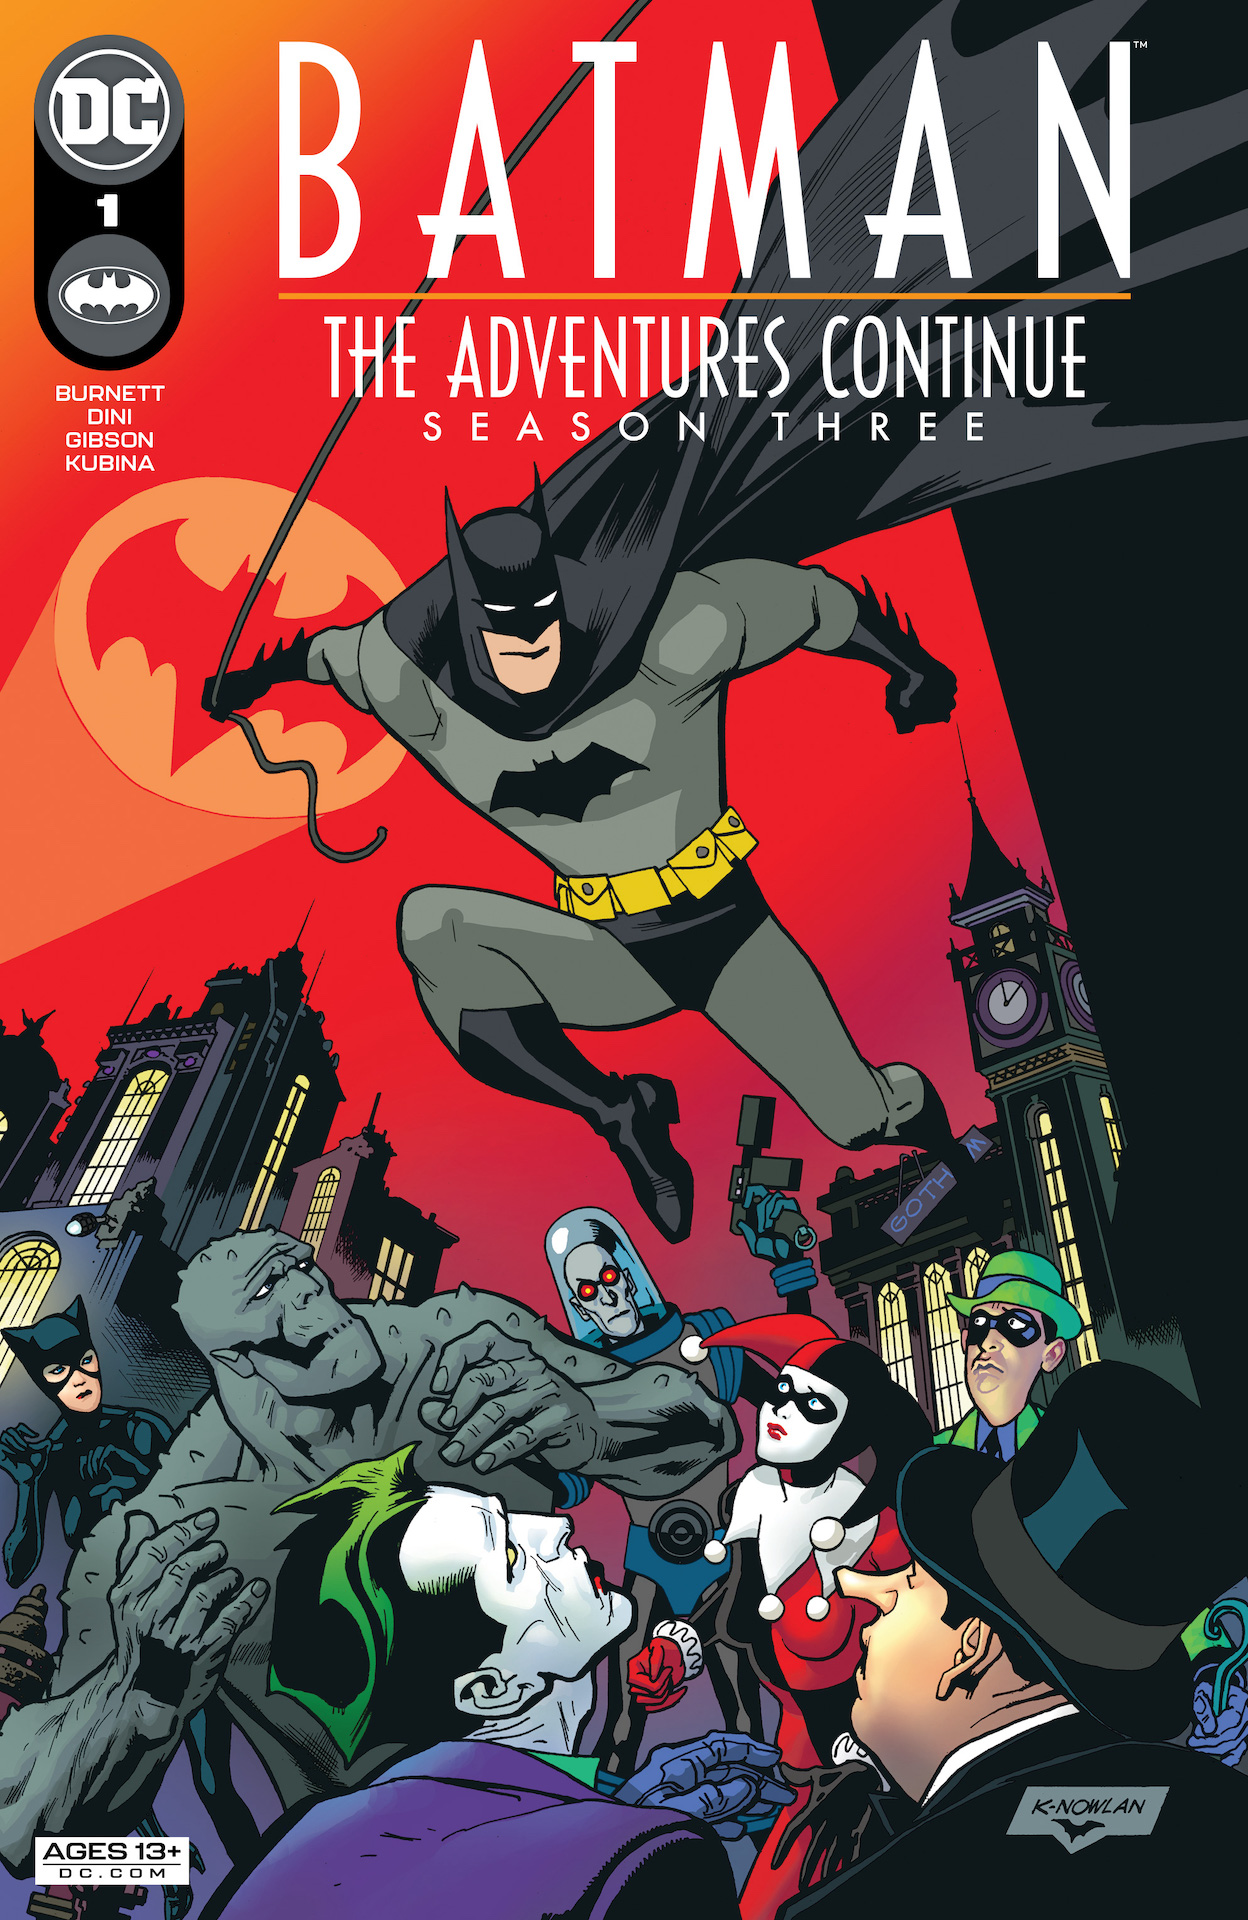 DC Preview: Batman: The Adventures Continue Season Three #1